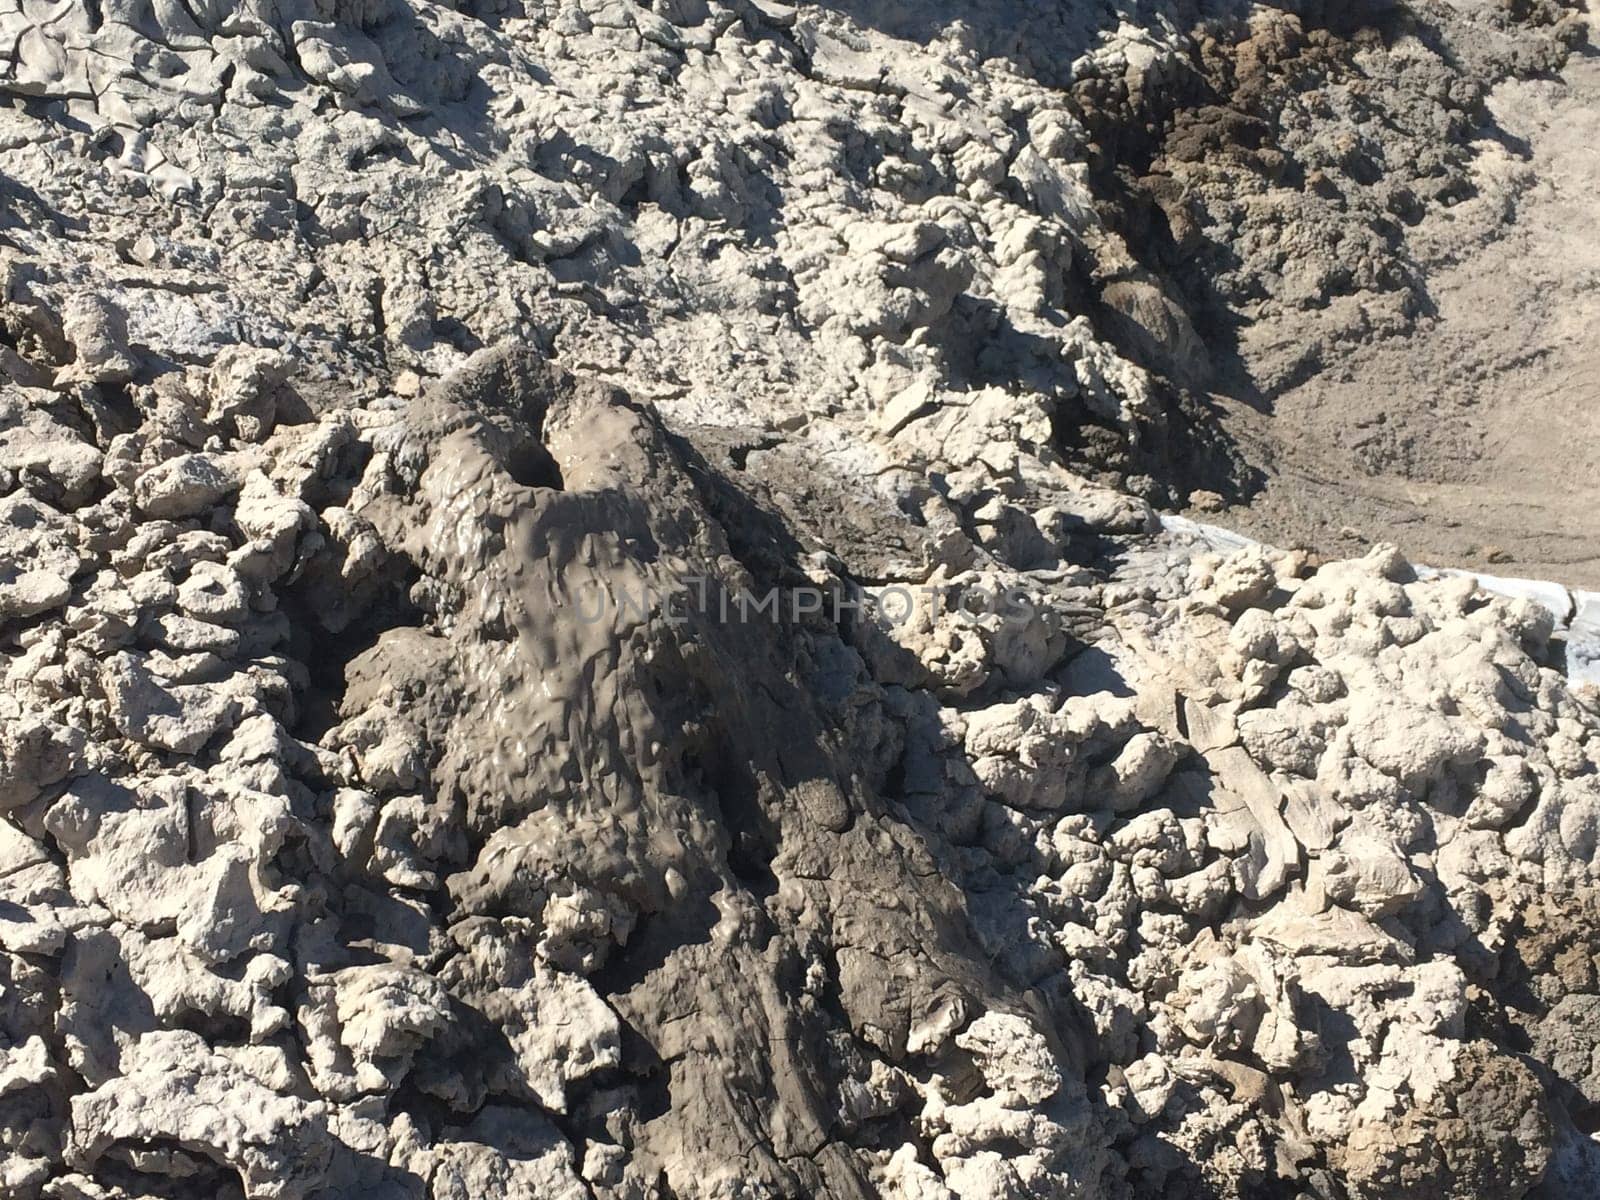 Salton Sea Mud Pots, Geothermal Activity in Southern California by grumblytumbleweed